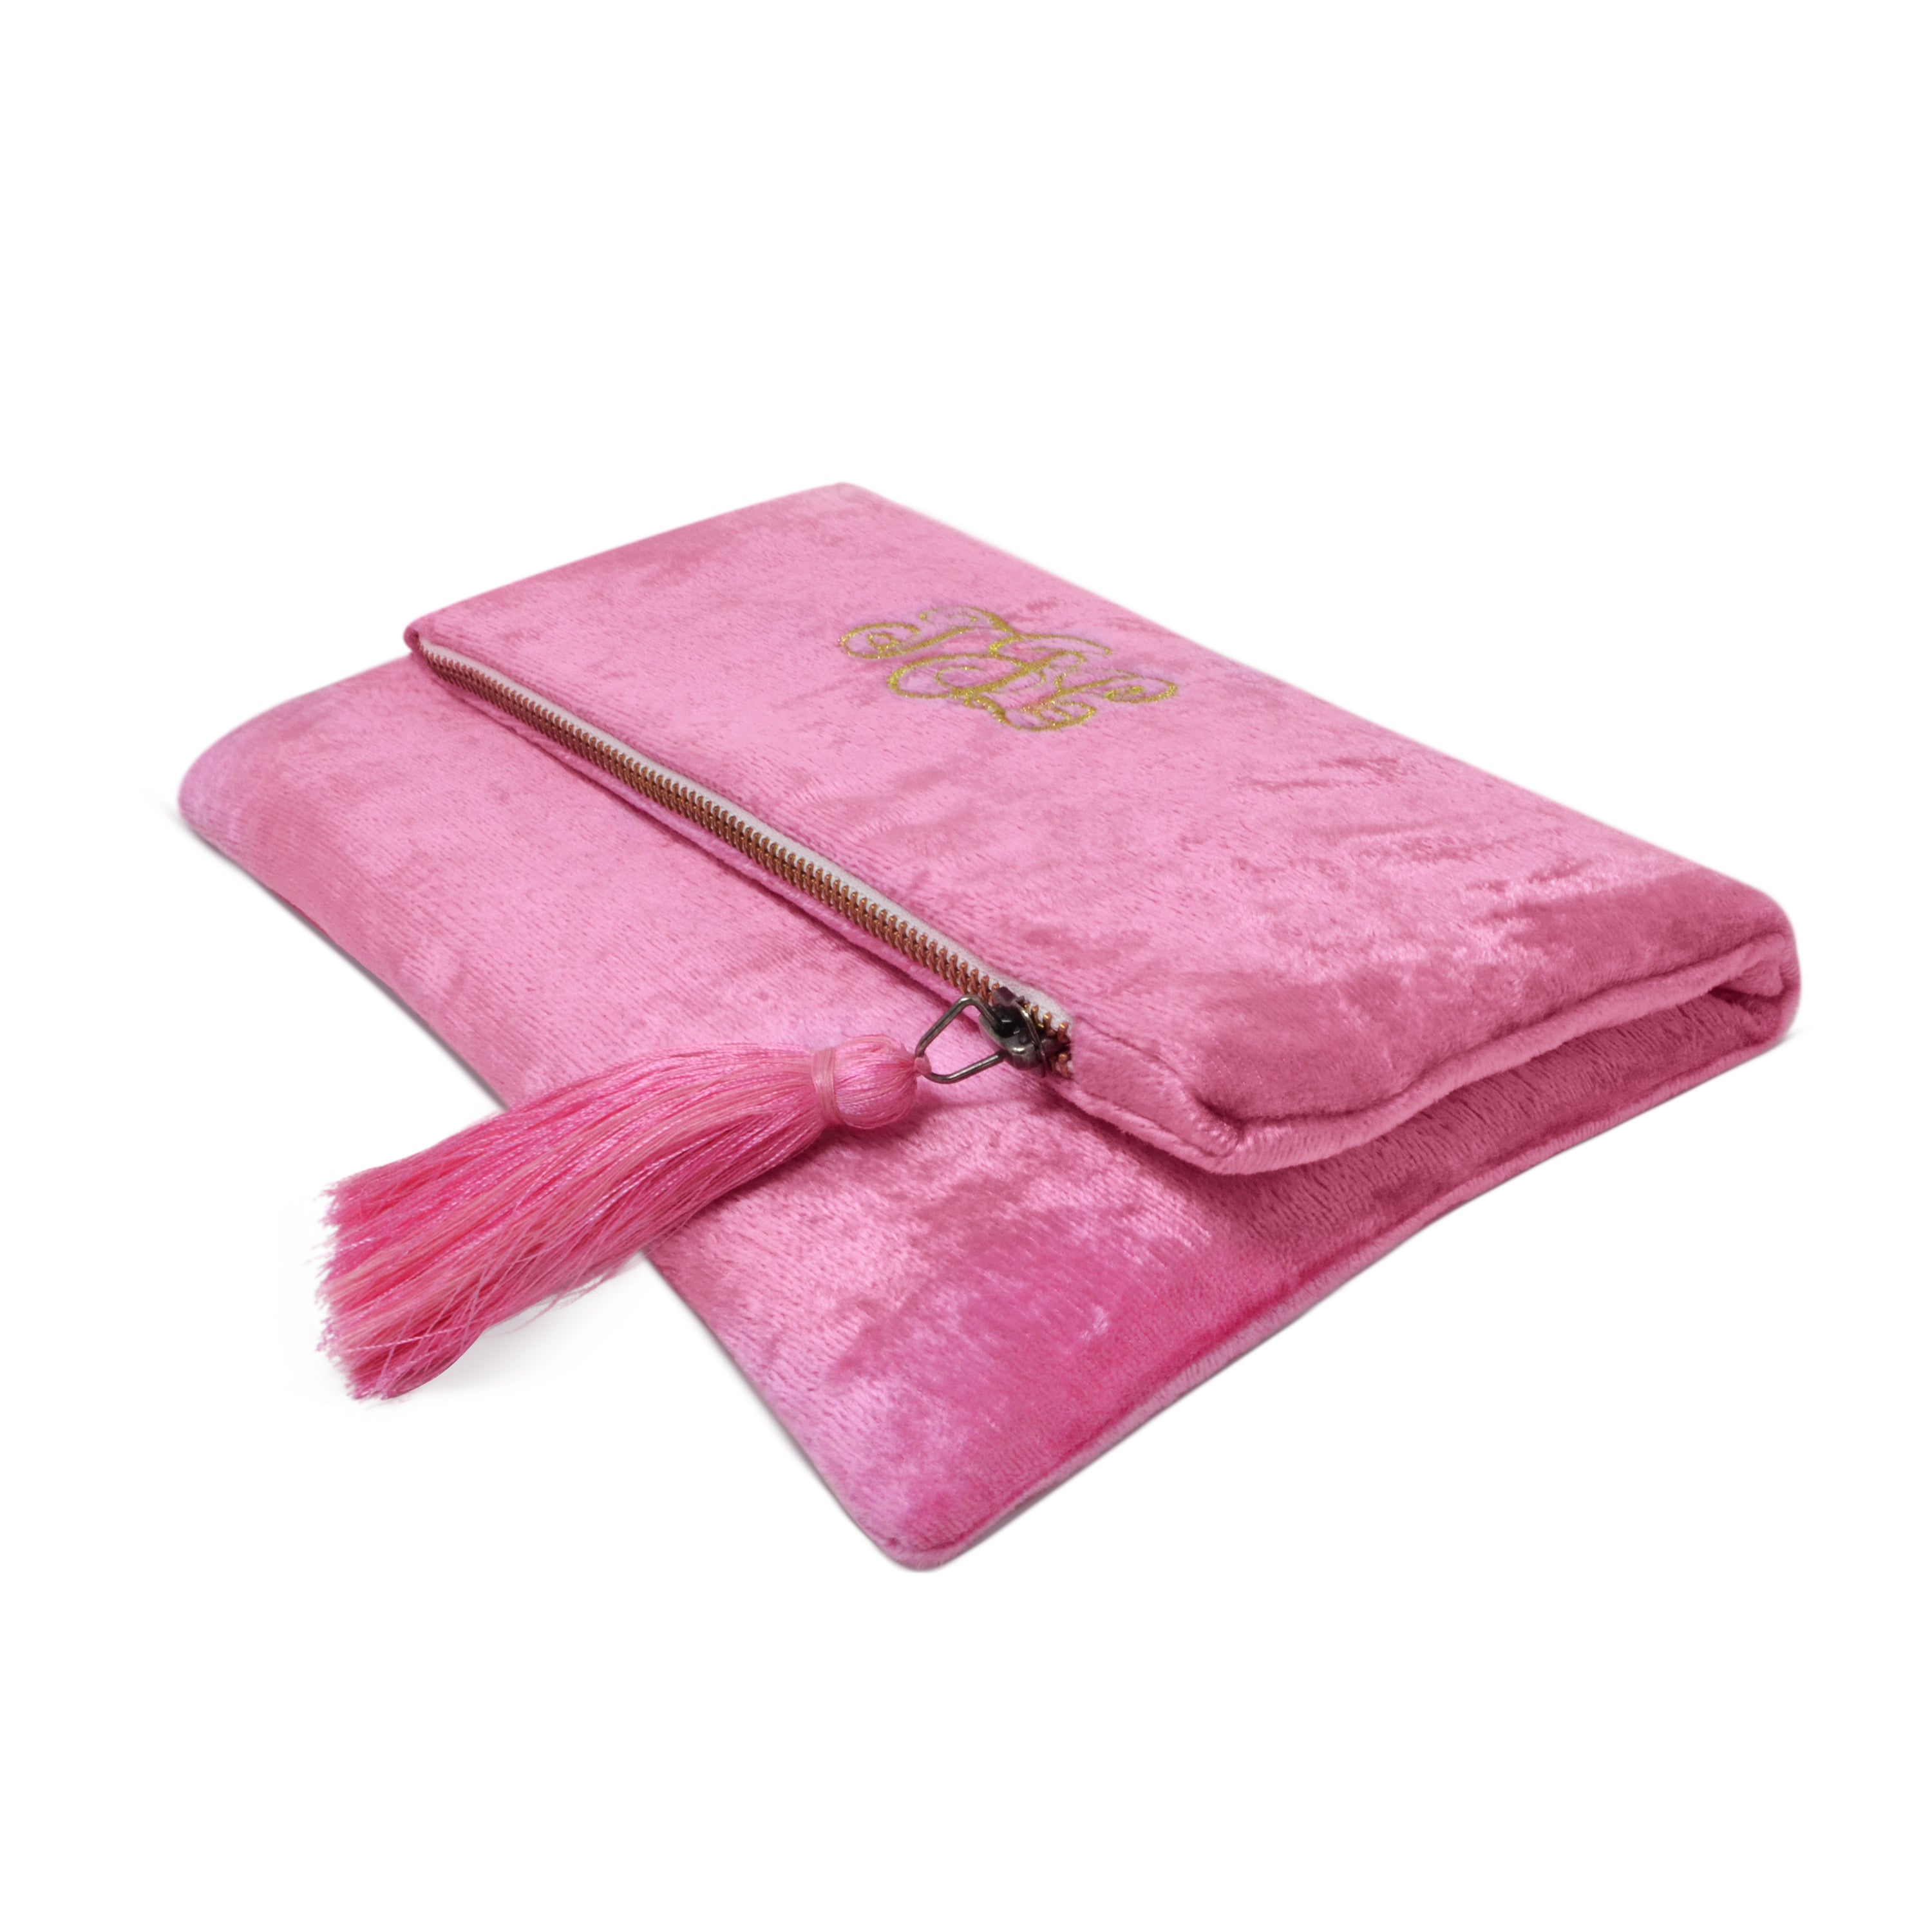 Bag: purse designer suede pink balenciaga designer dusty pink suede all pink  wishlist kamel leather | Bags, Fashion bags, Purses